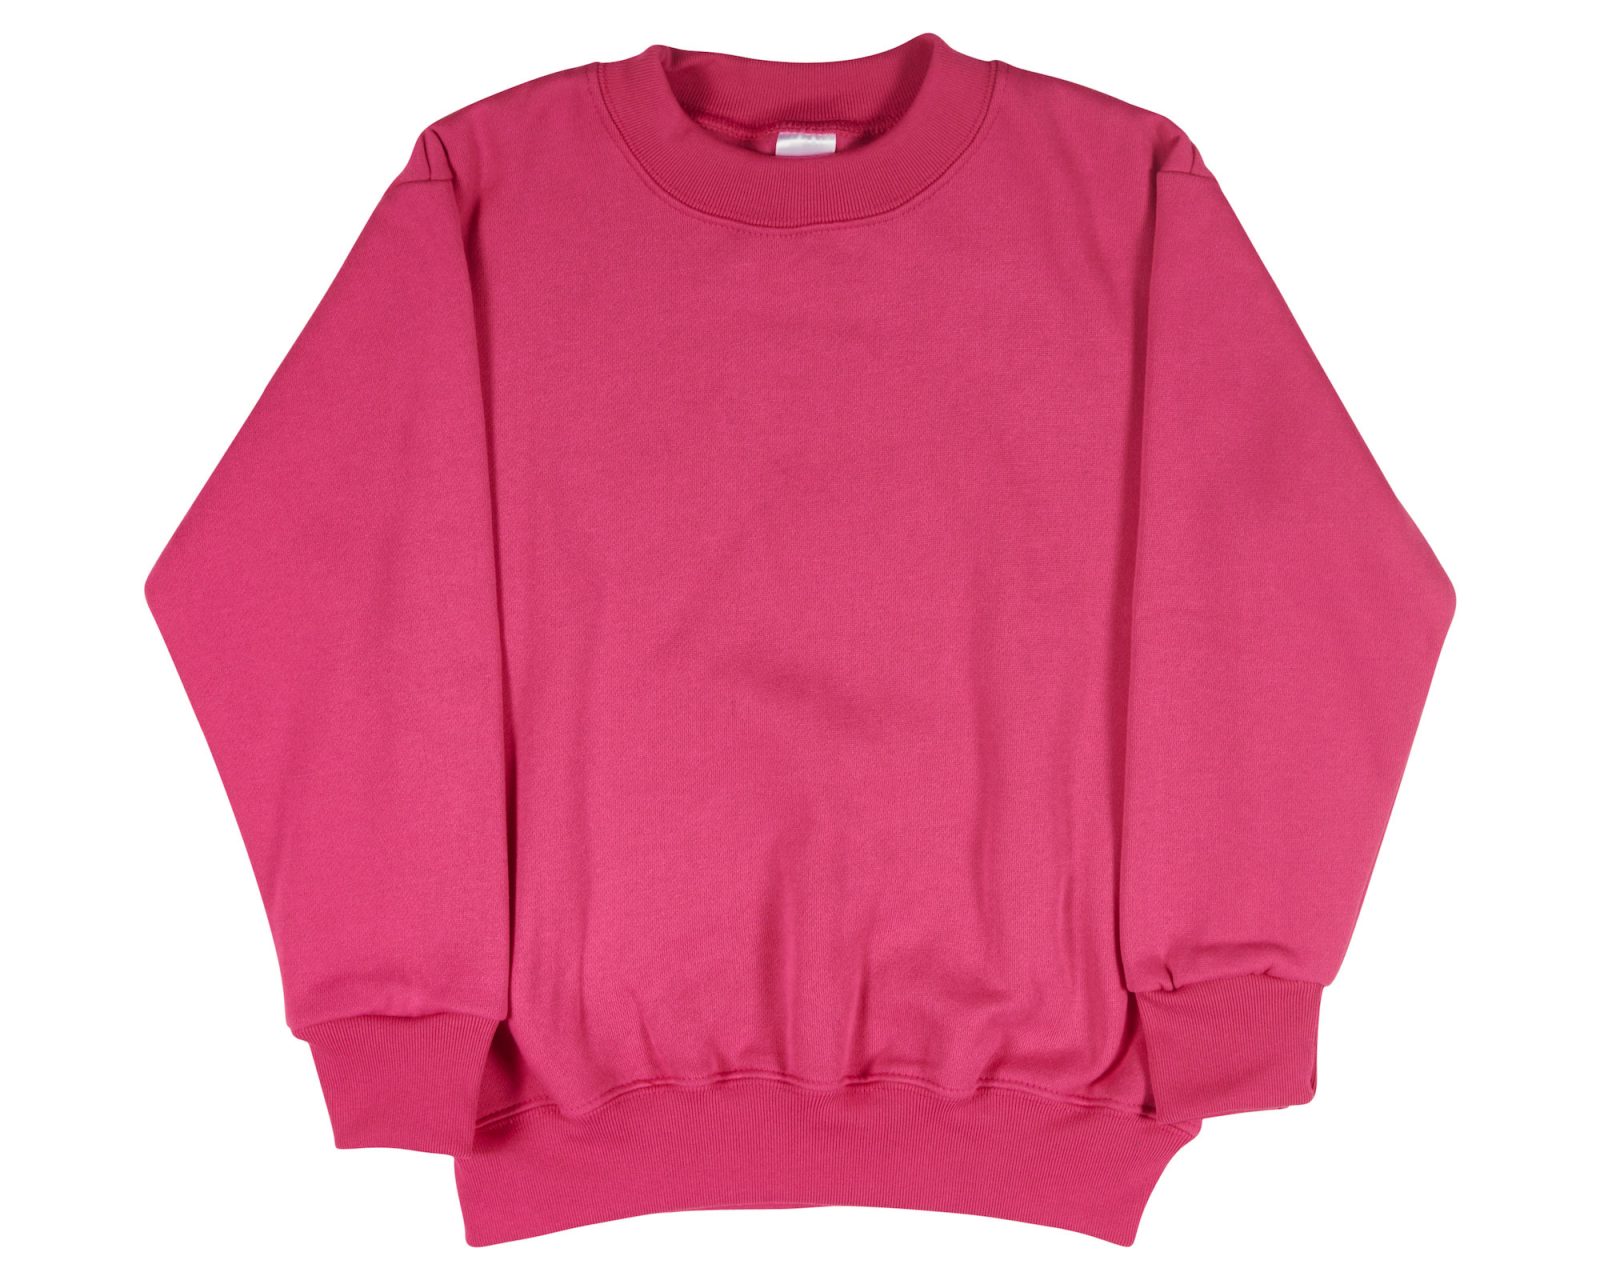 Qualitops Kids Classic Sweater Australian made